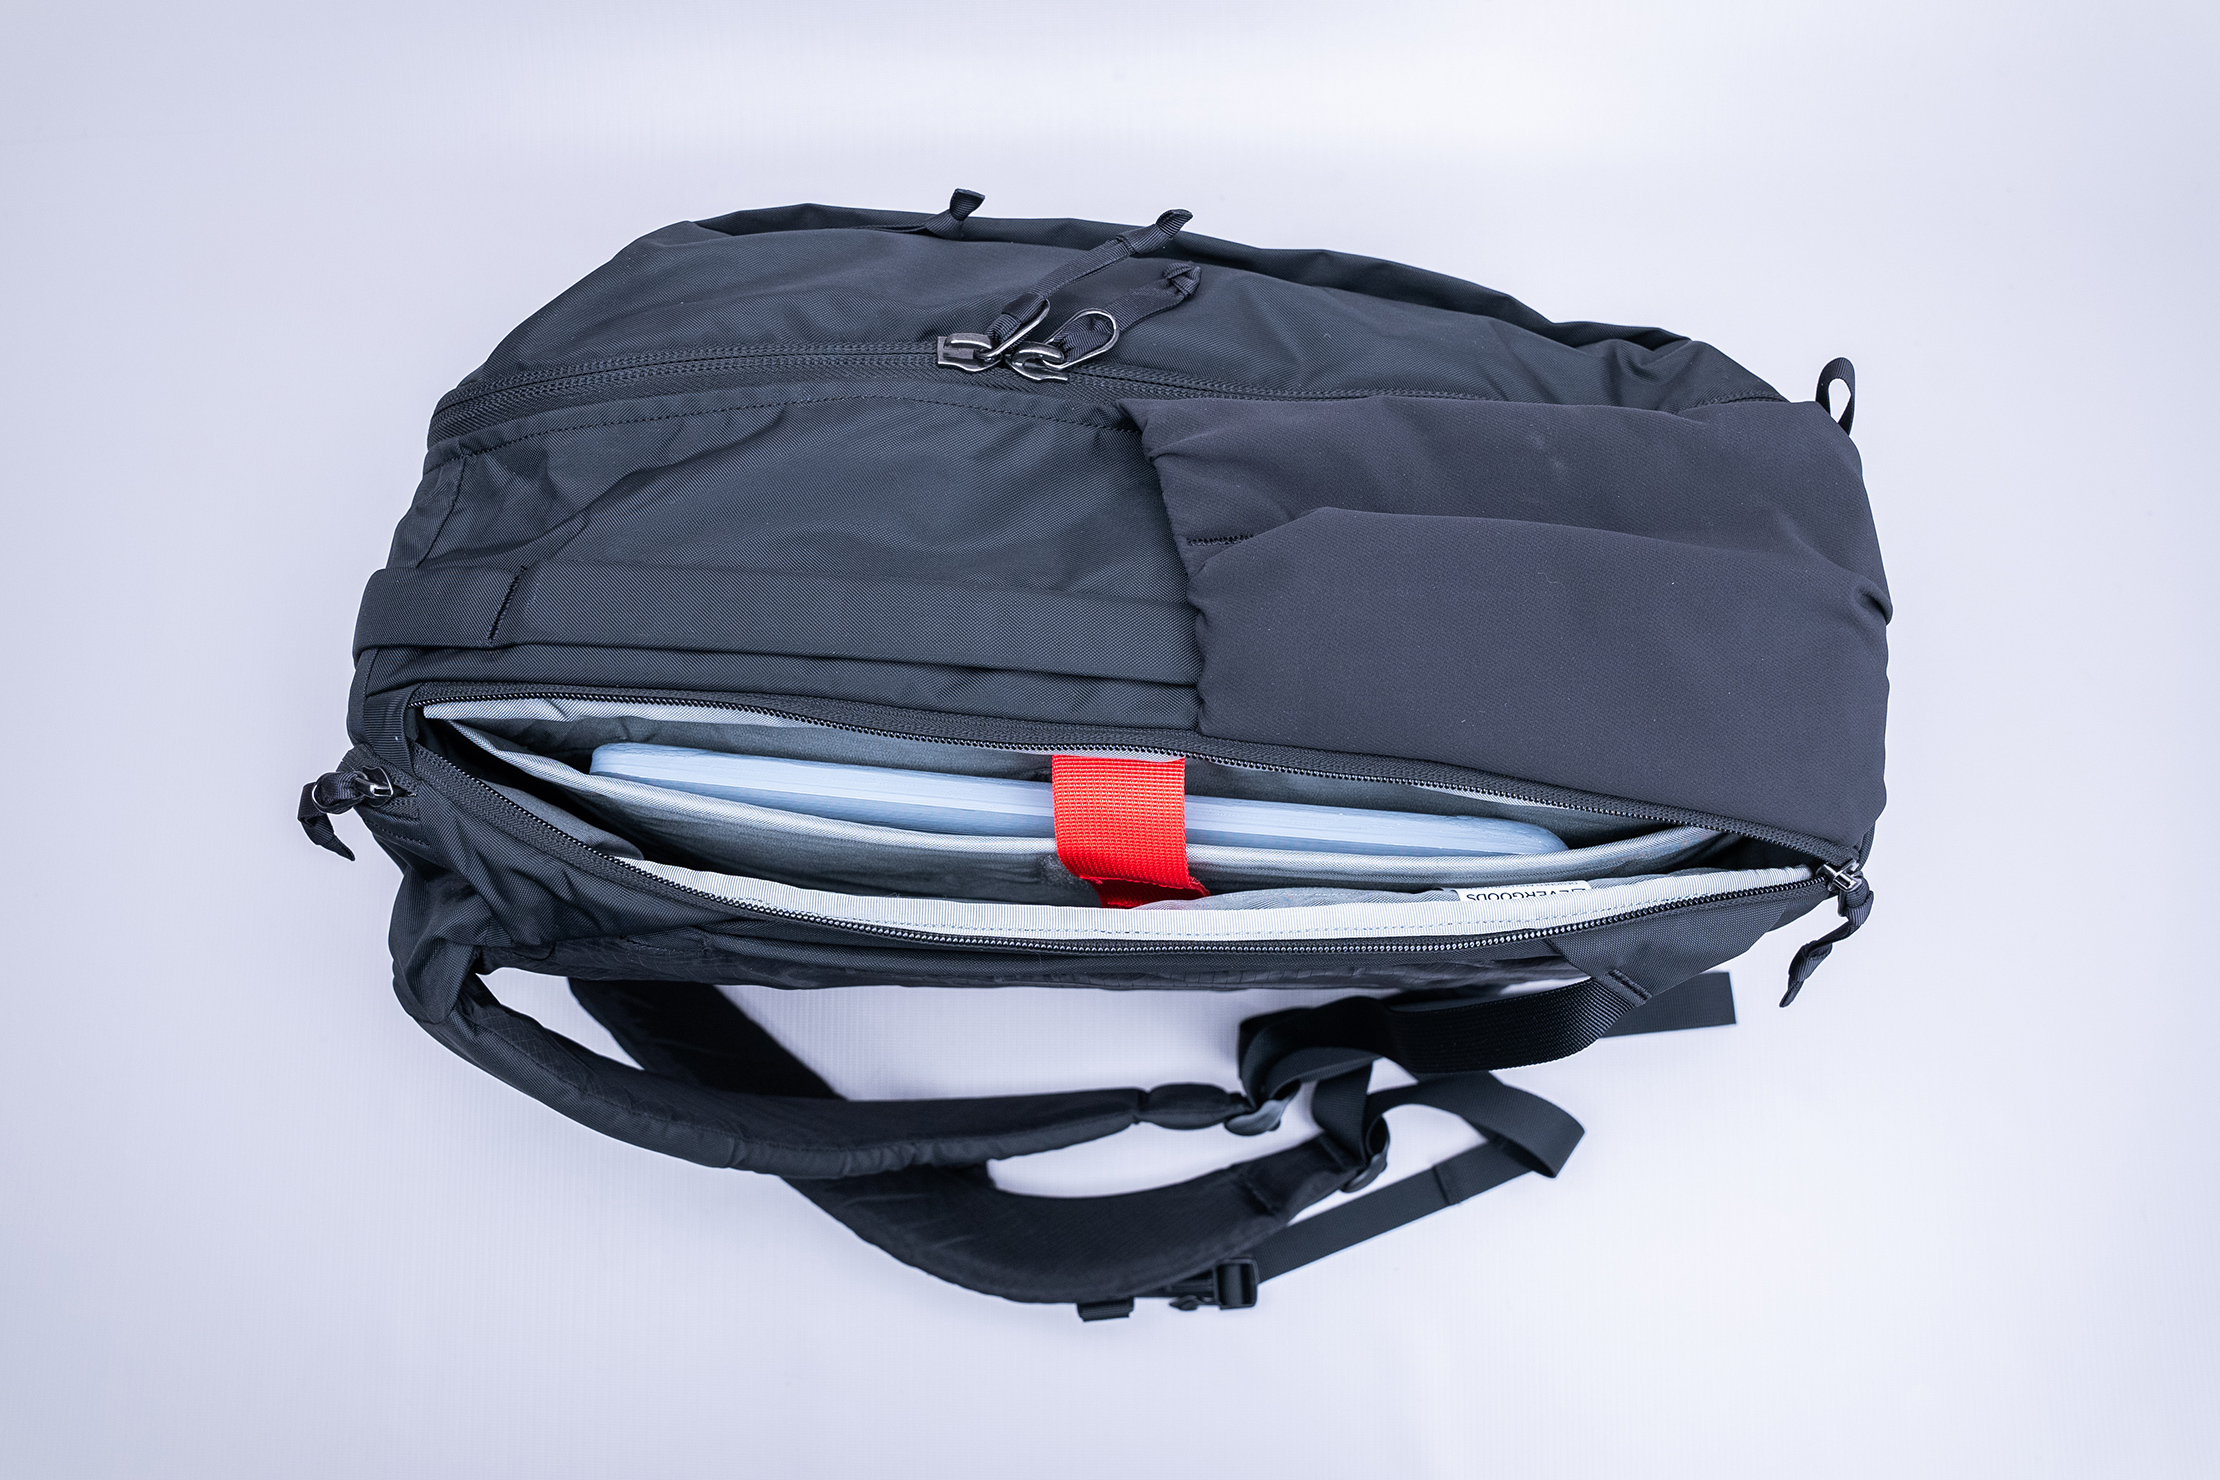 EVERGOODS Civic Travel Bag 26L Laptop Compartment